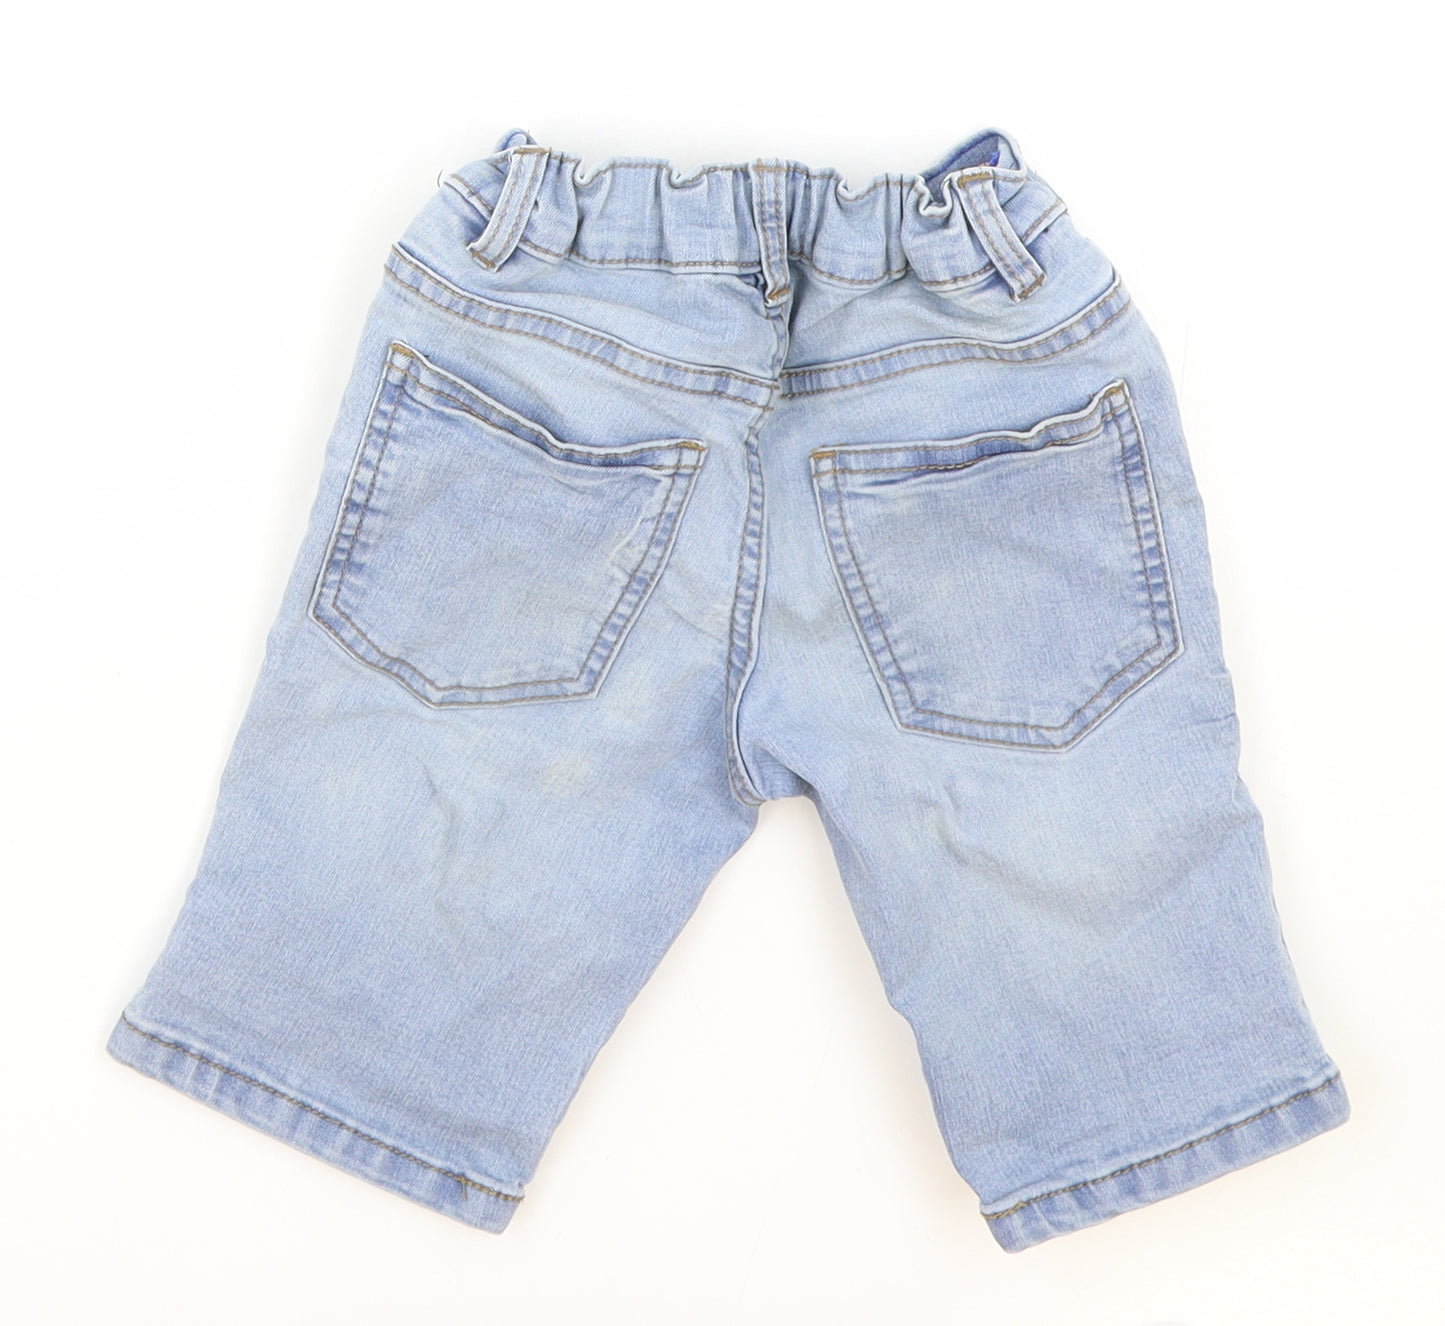 NEXT Boys Blue Cotton Bermuda Shorts Size 6 Years Regular Zip